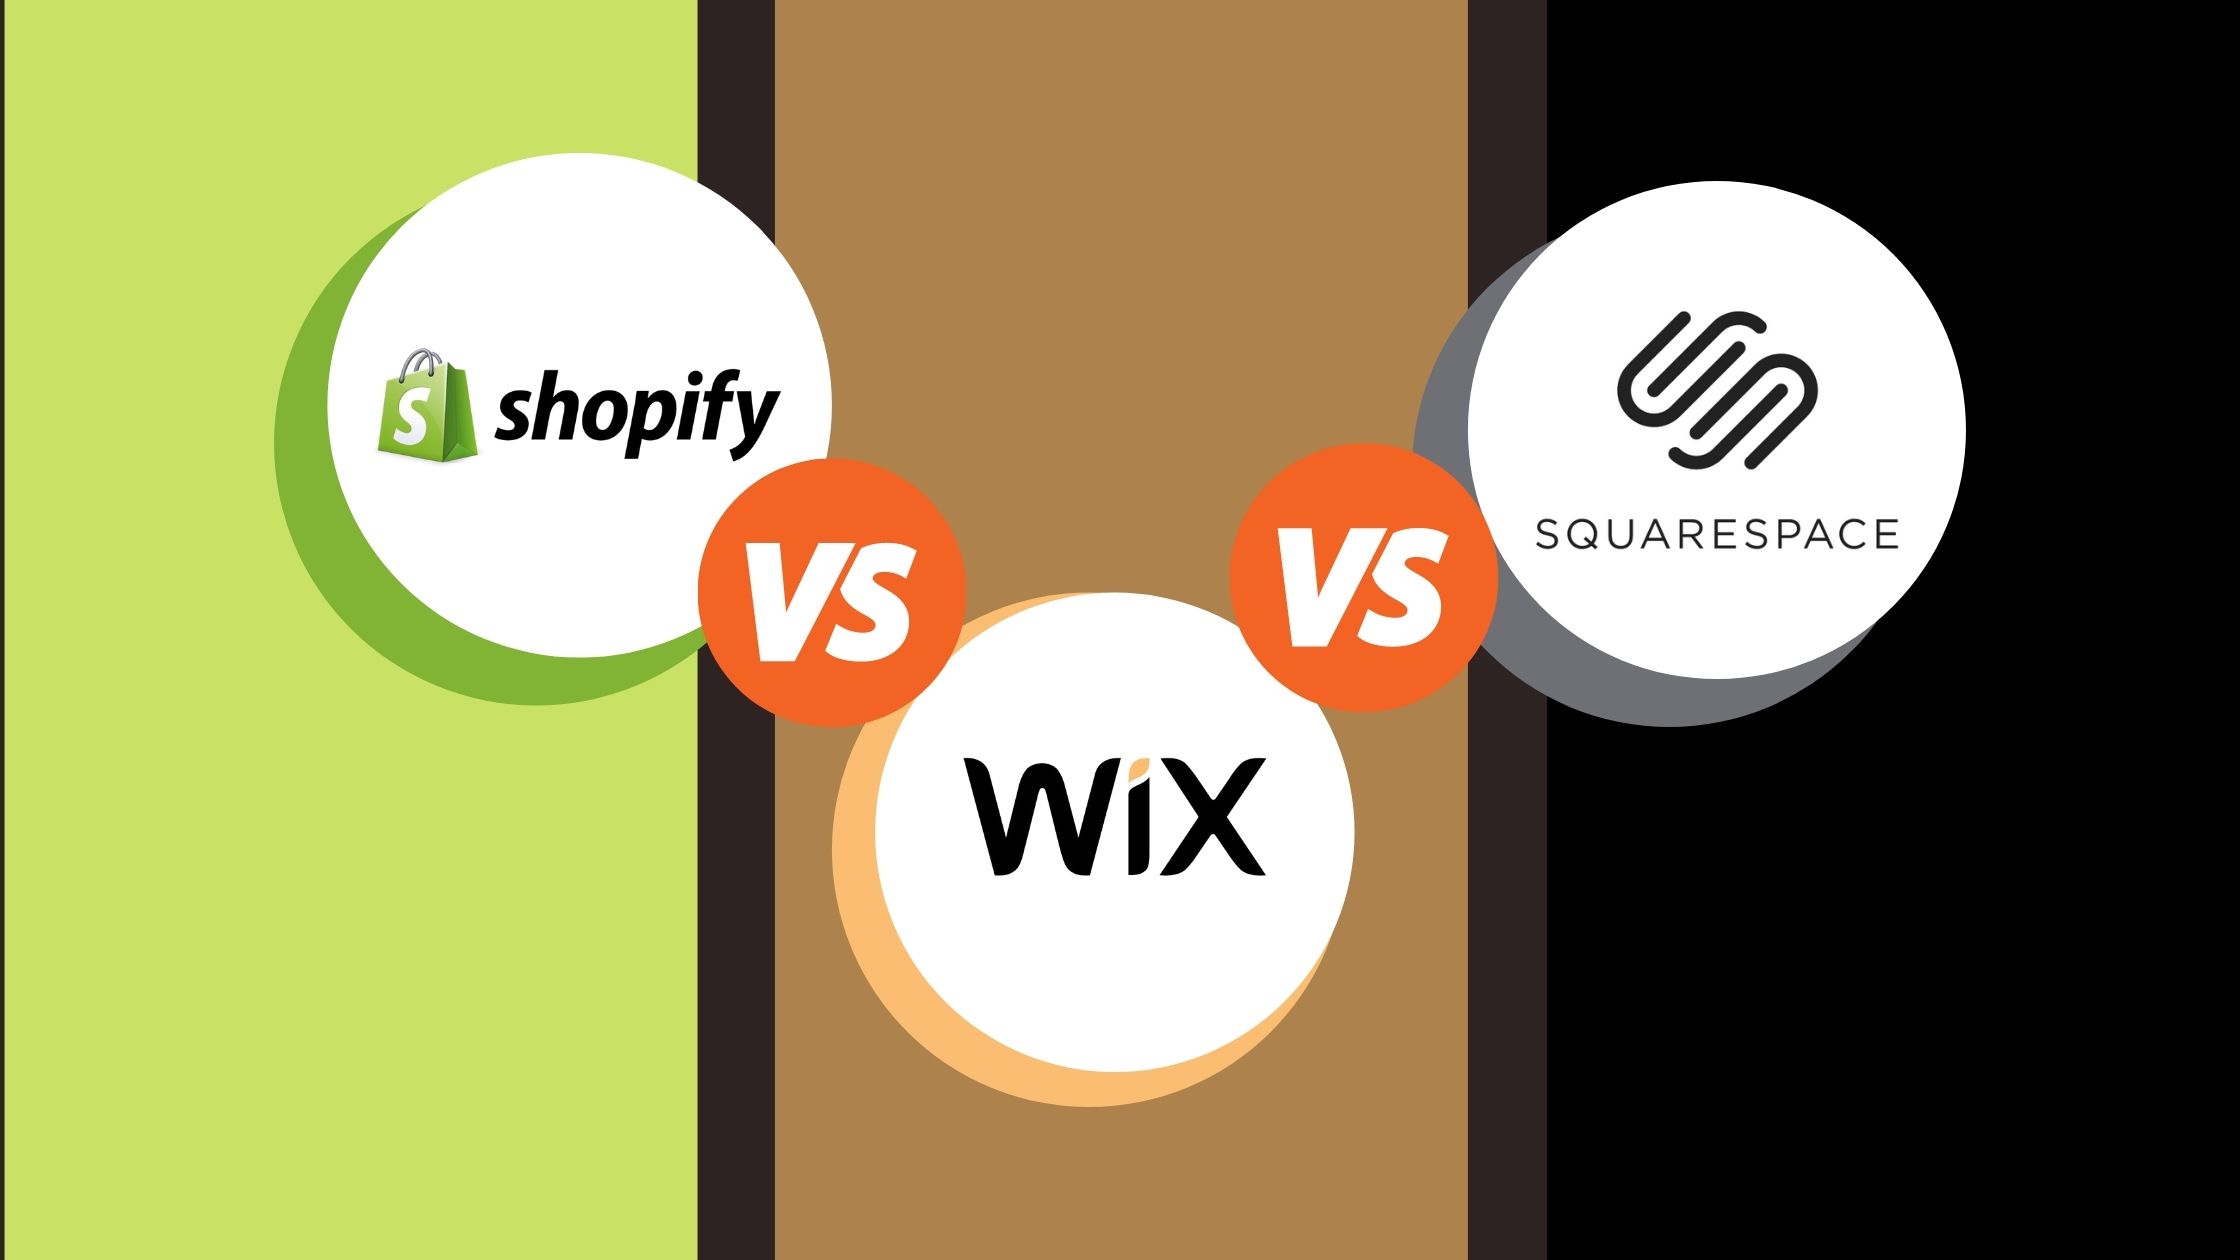 shopify vs wix vs sqaurespace